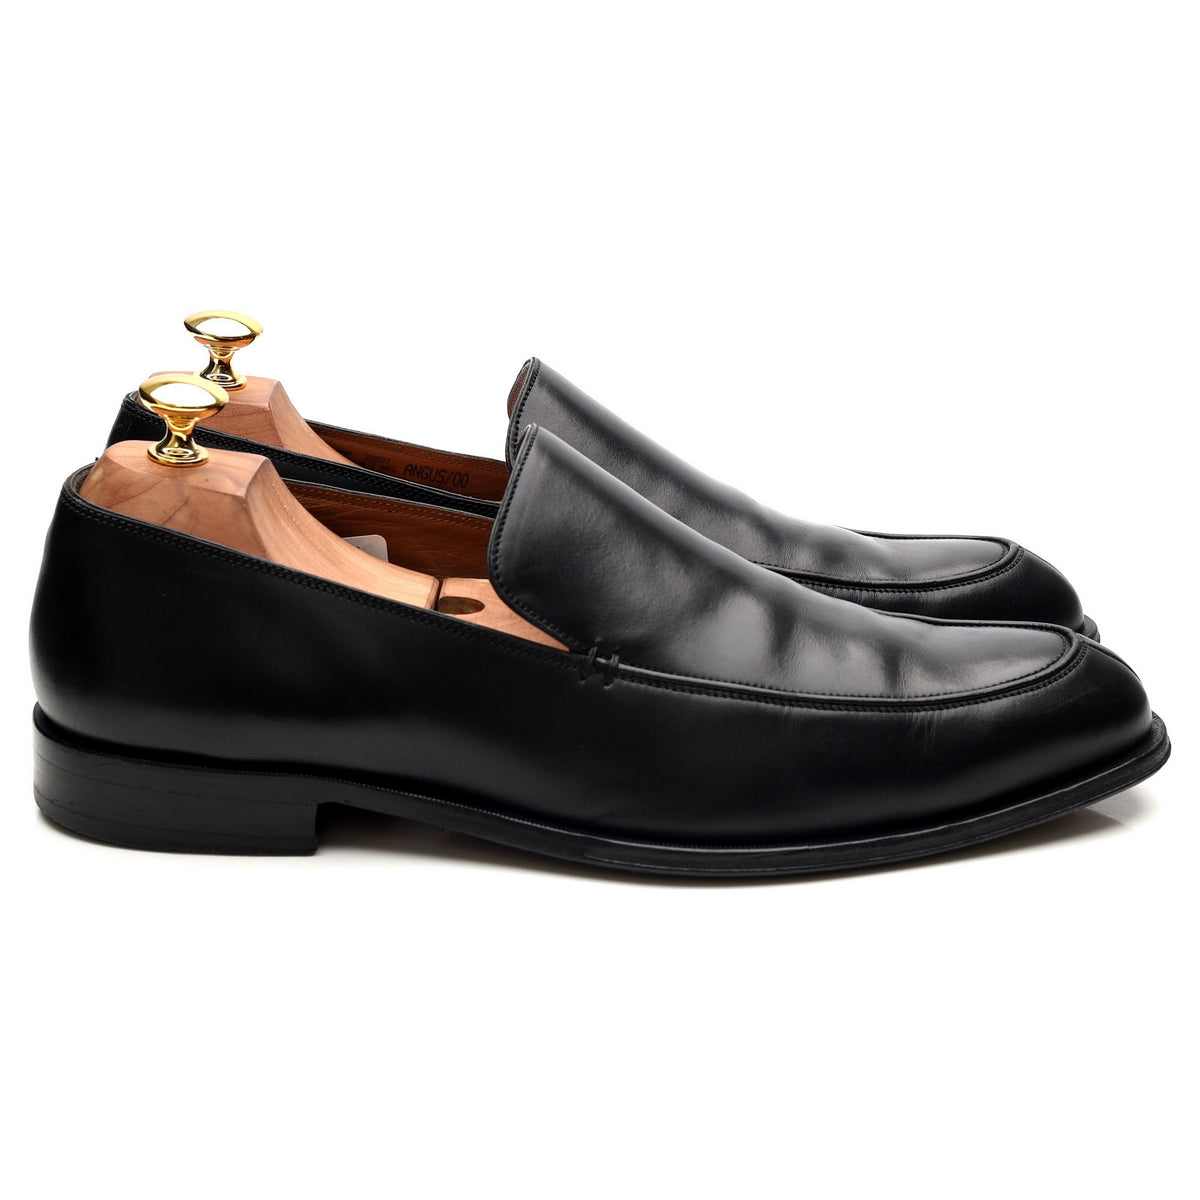 Black Leather Loafers UK 8 EEE